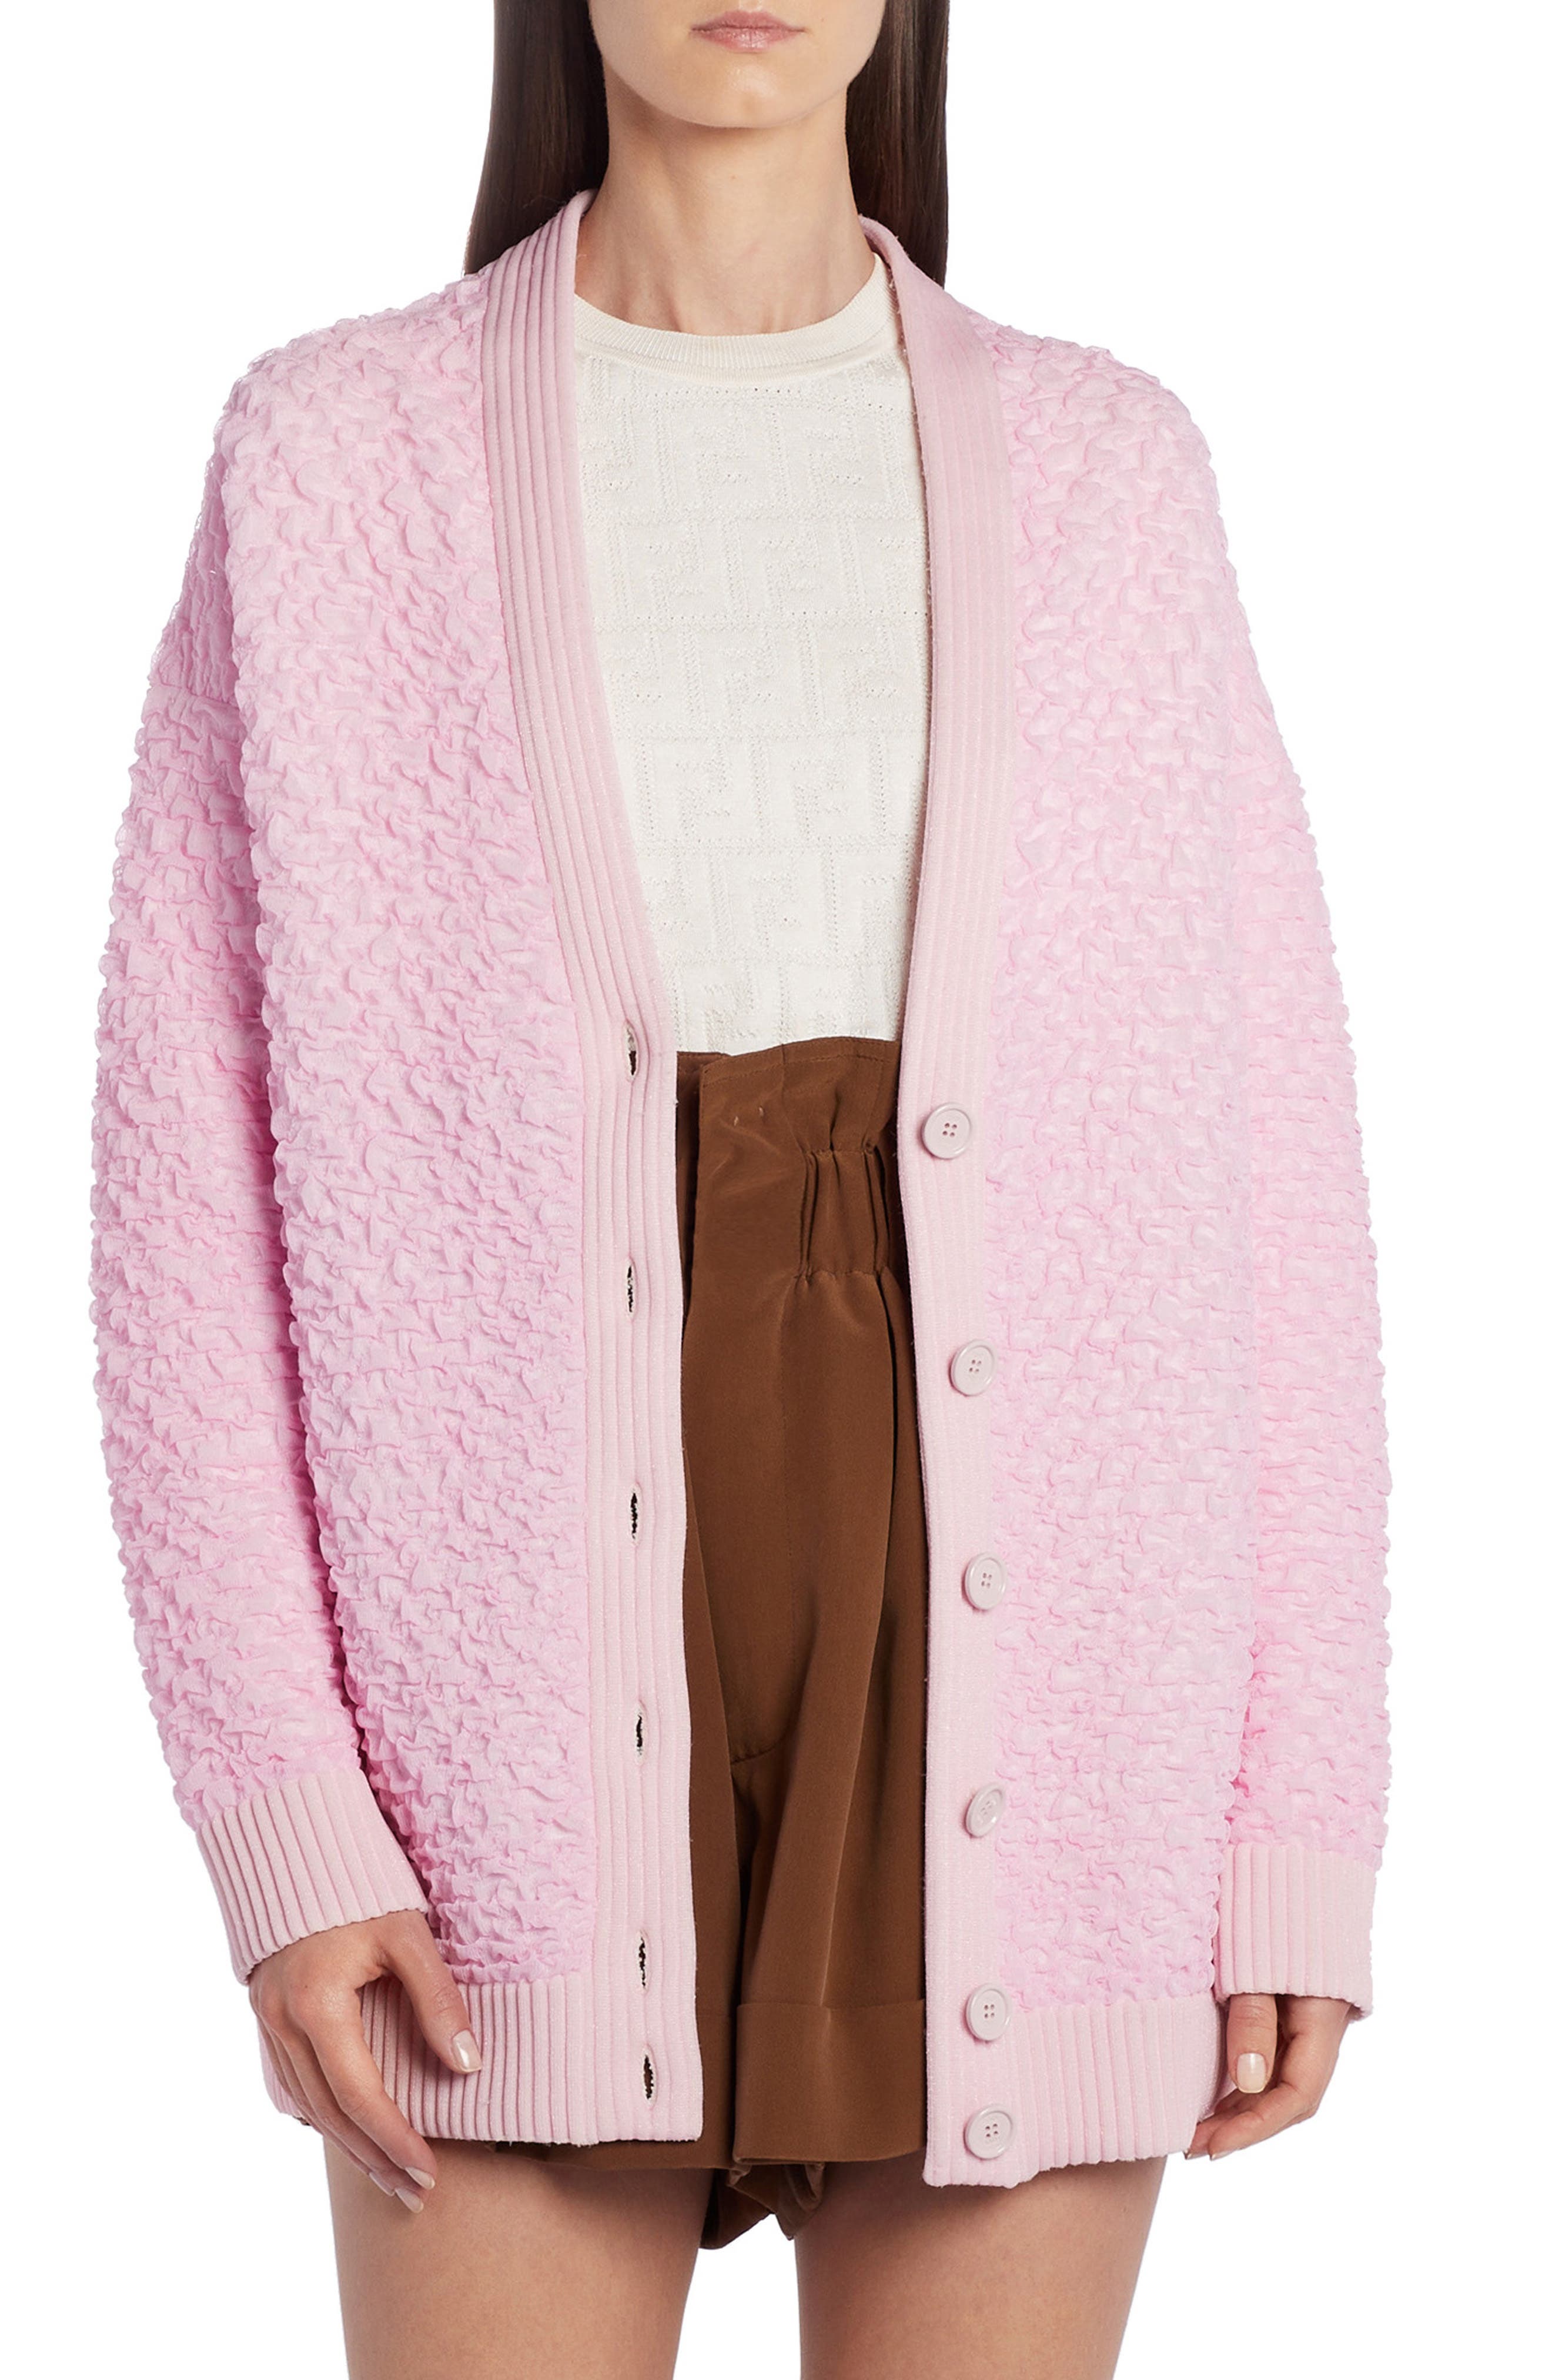 pink fendi sweater